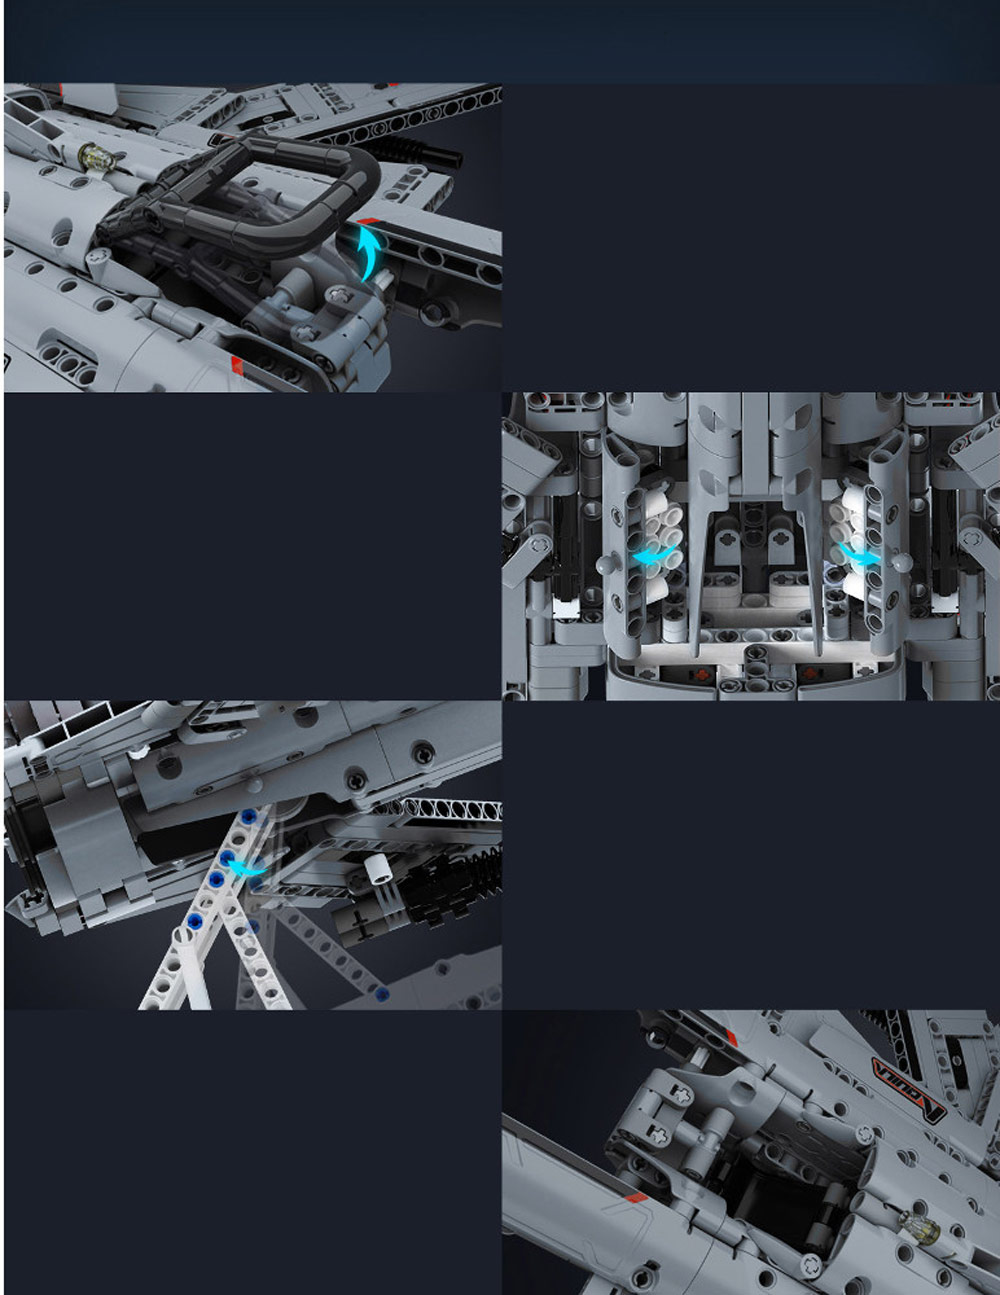 Xiaomi Building Blocks Aquila Reconnaissance Aircraft Jupiter Dawn Series Sci-Fi Kids Puzzle Toy